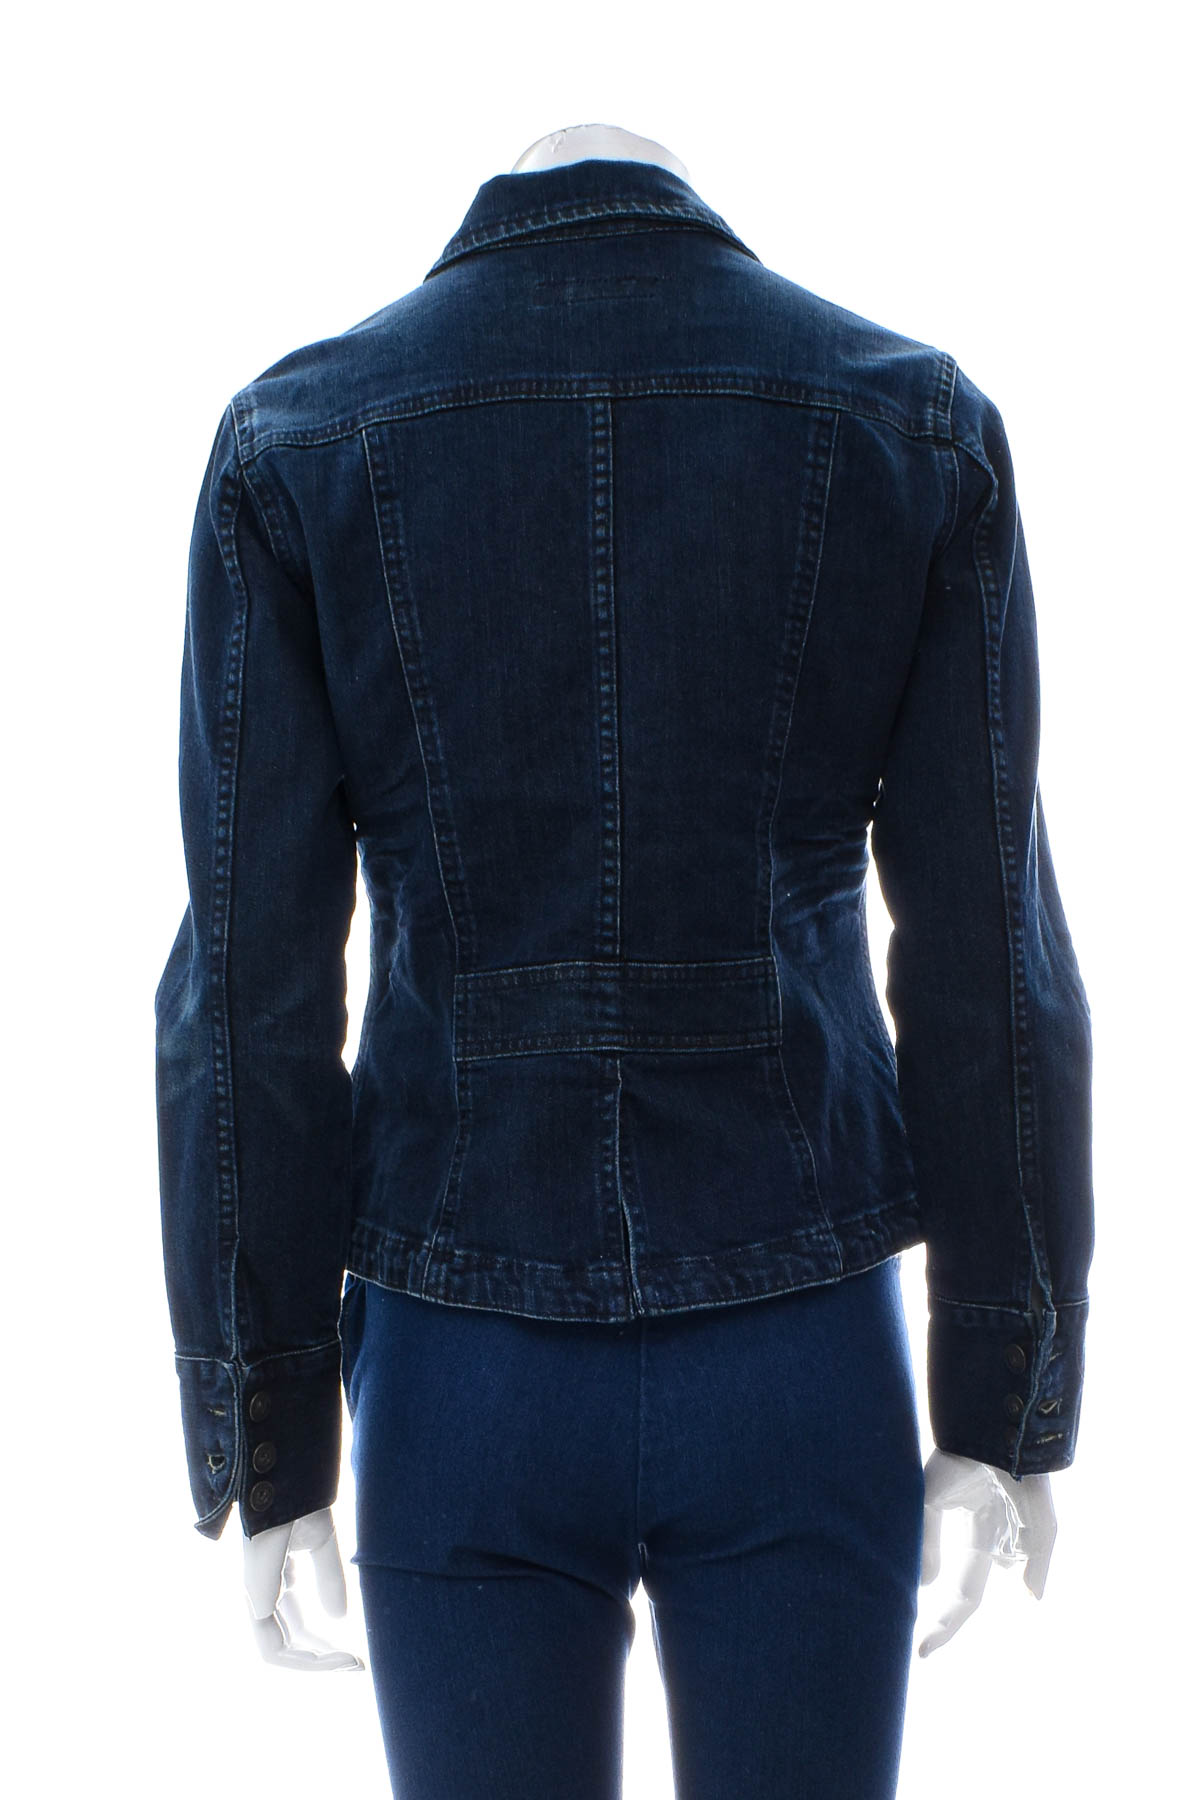 Damska kurtka dżinsowa - Calvin Klein Jeans - 1